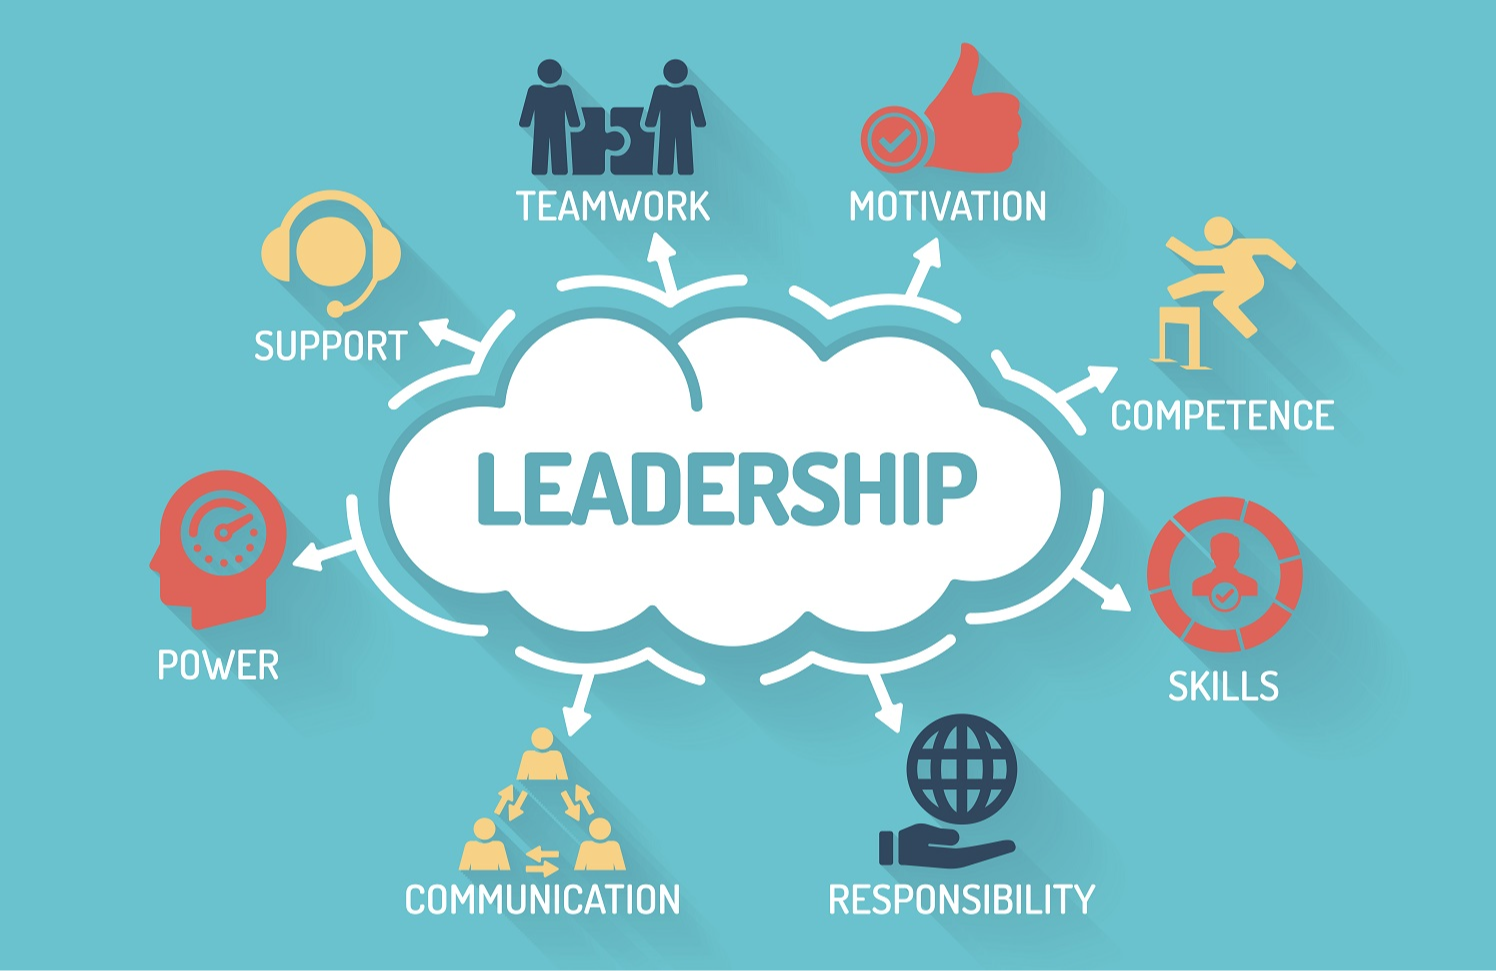 Leadership Teamwork Motivation Competence Skills Responsibility Communication Power Supportx